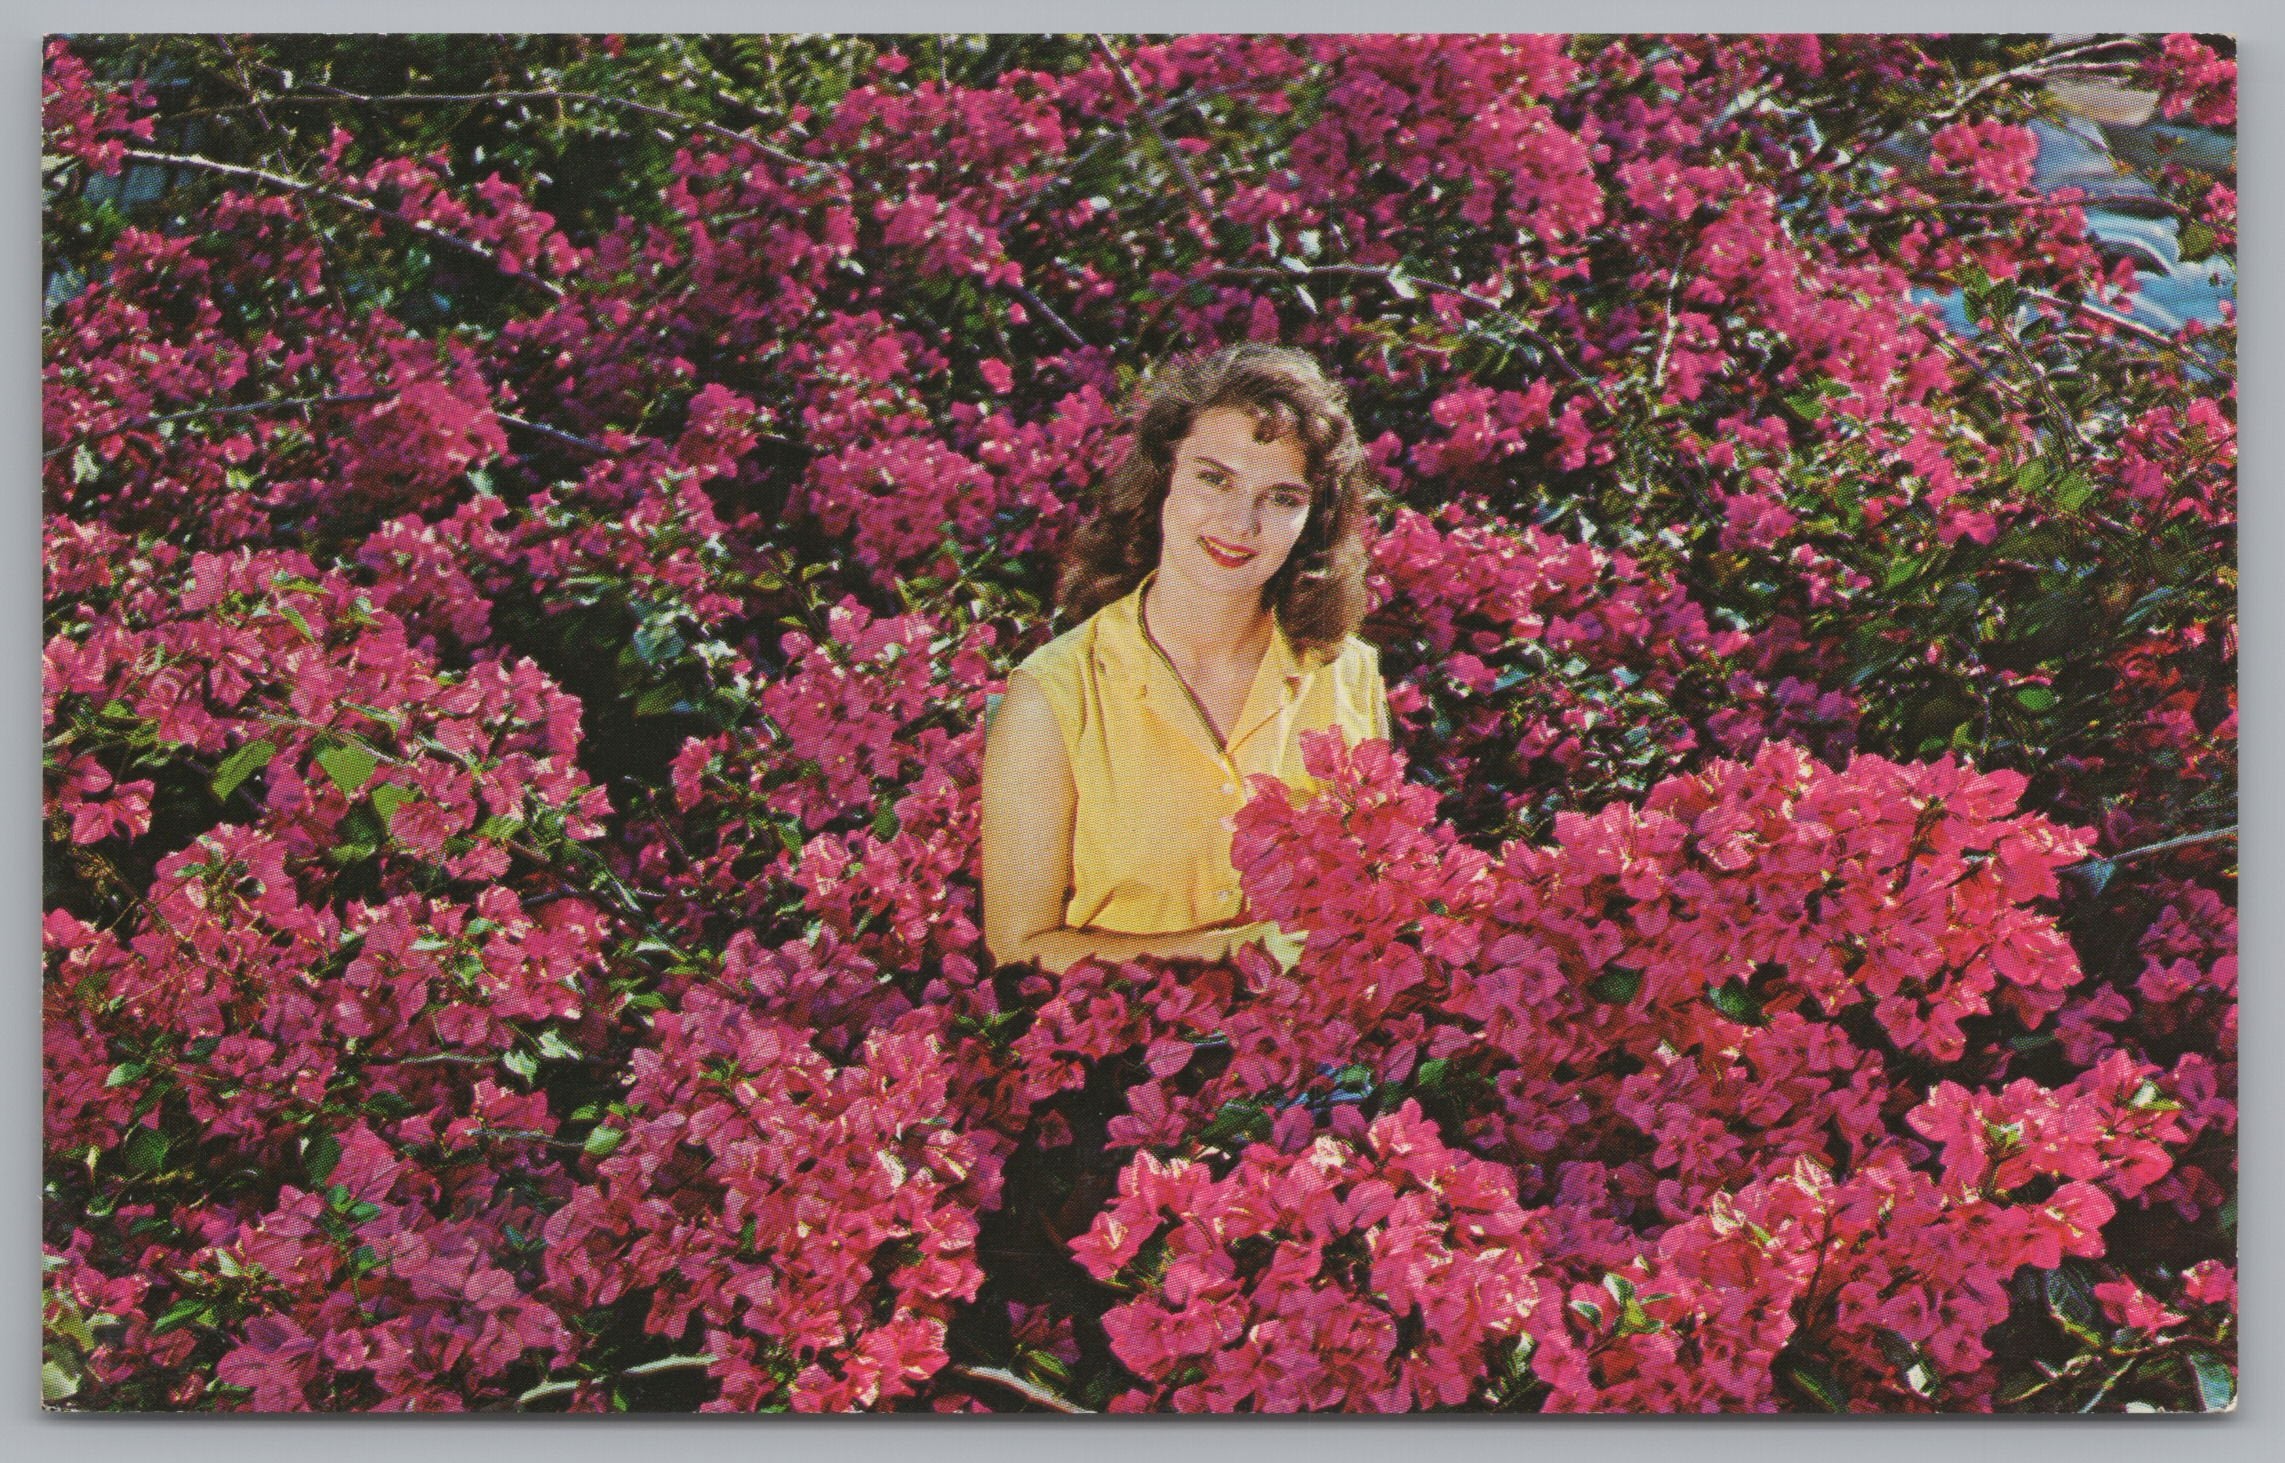 Bougainvillea, Sunken Gardens, St. Petersburg, Florida, USA, Vintage Post Card.